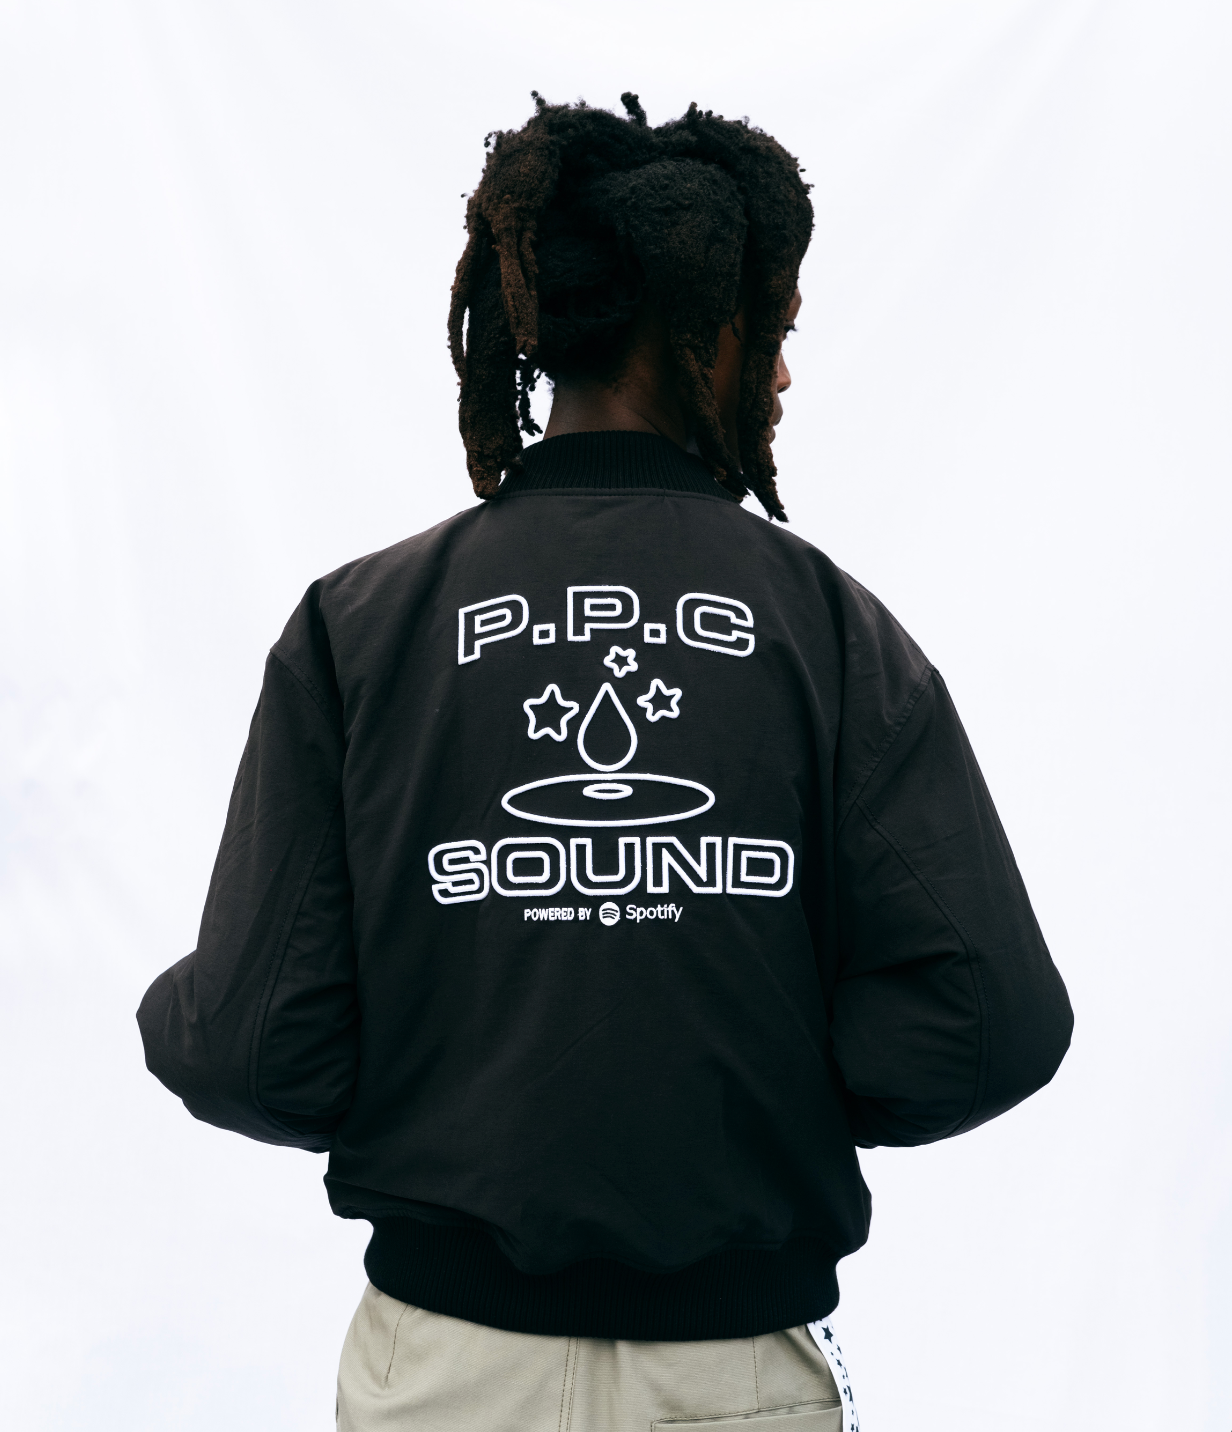 PPC SOUND powered by Spotify Bomber Jacket - Black